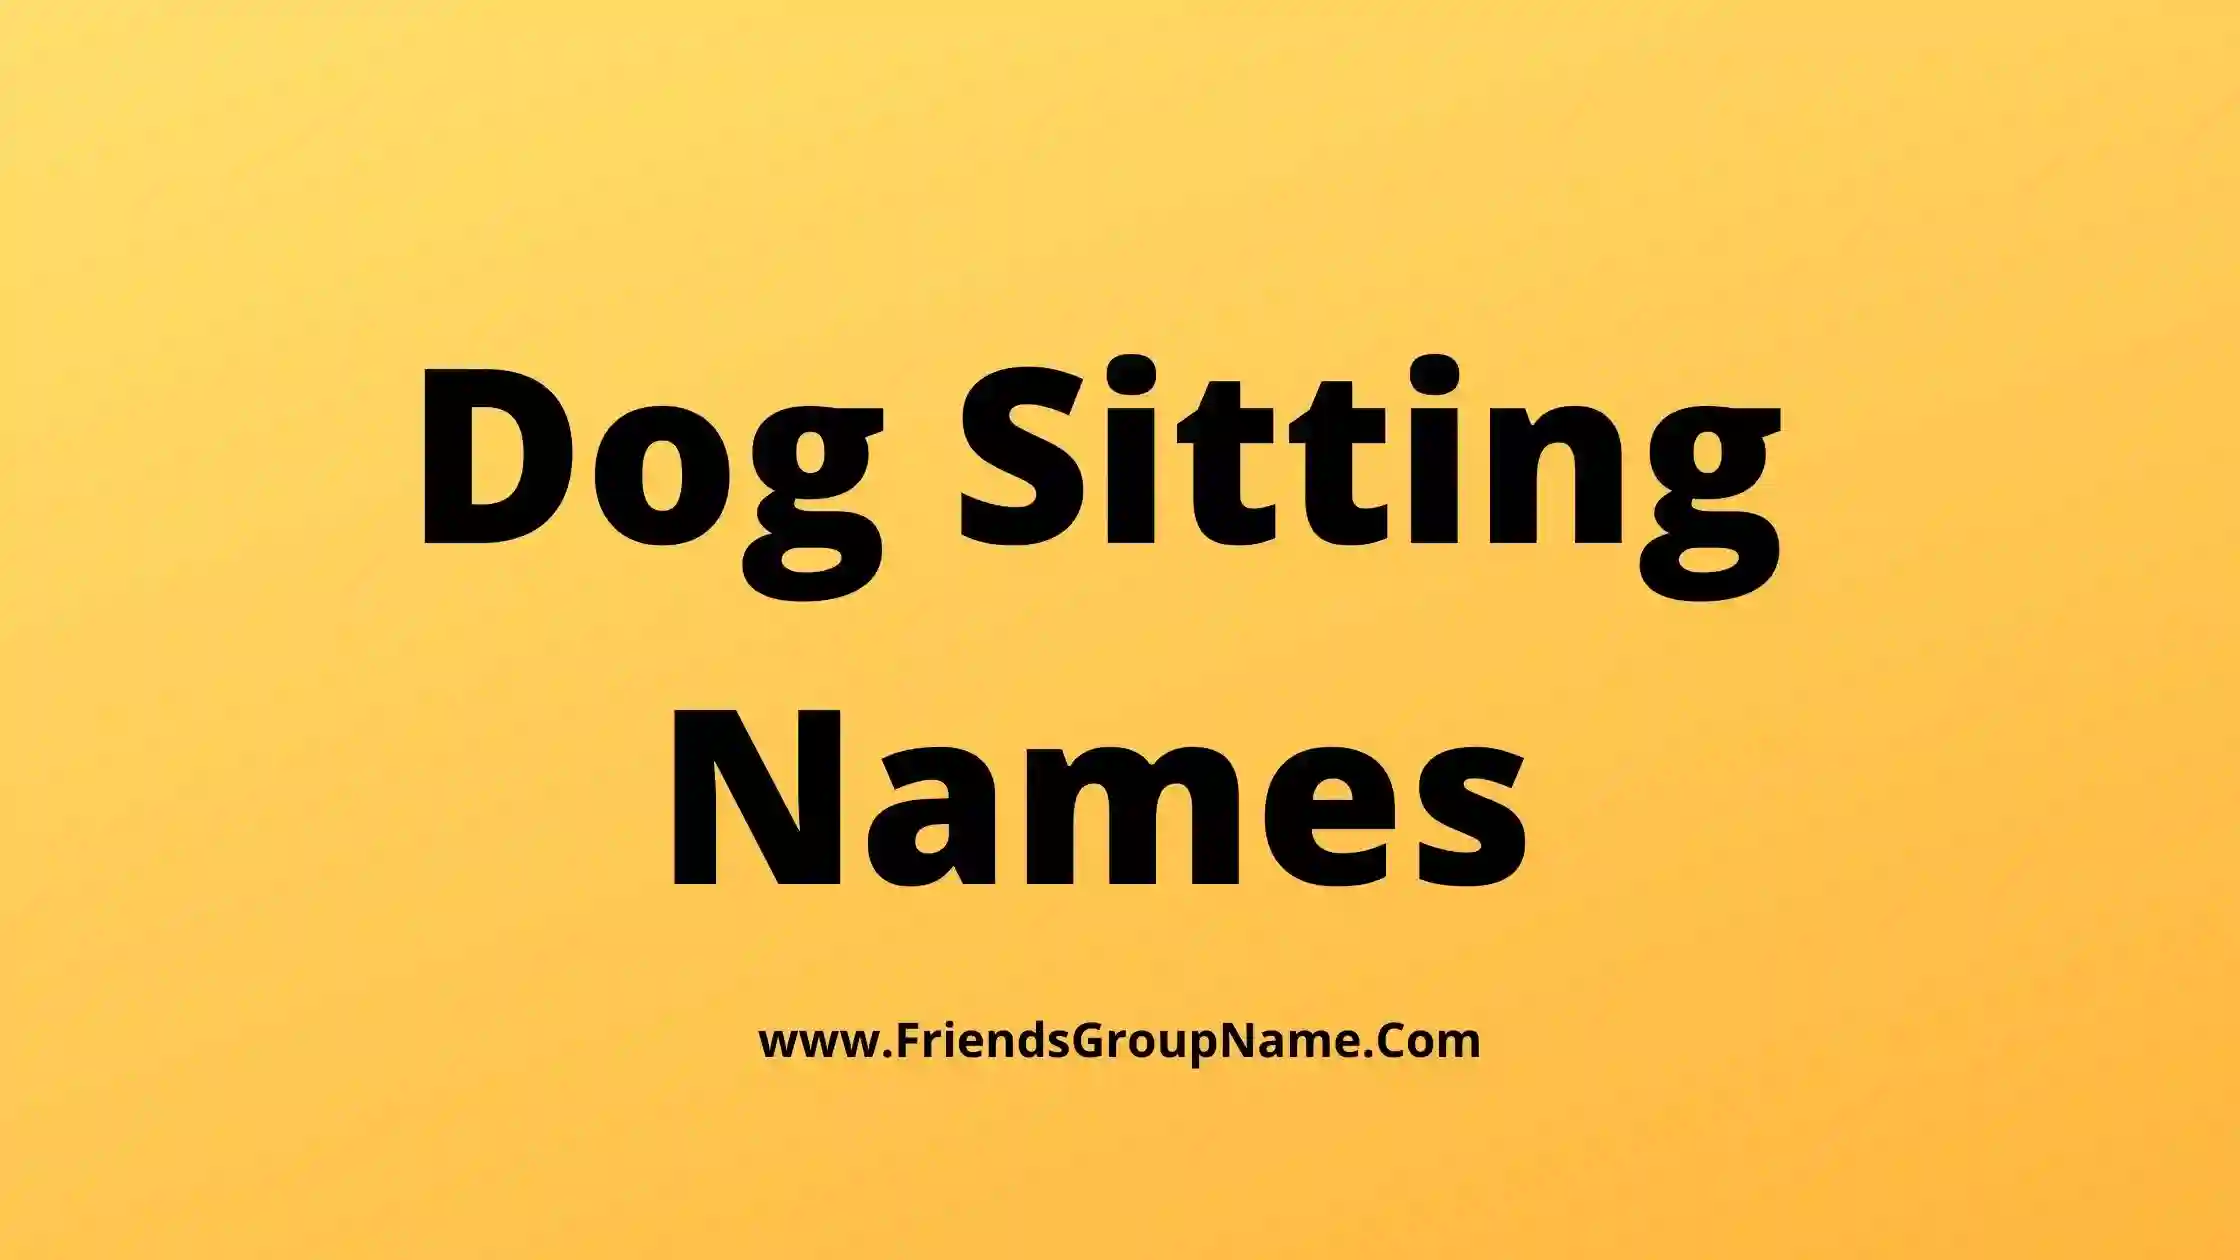 Dog Sitting Names